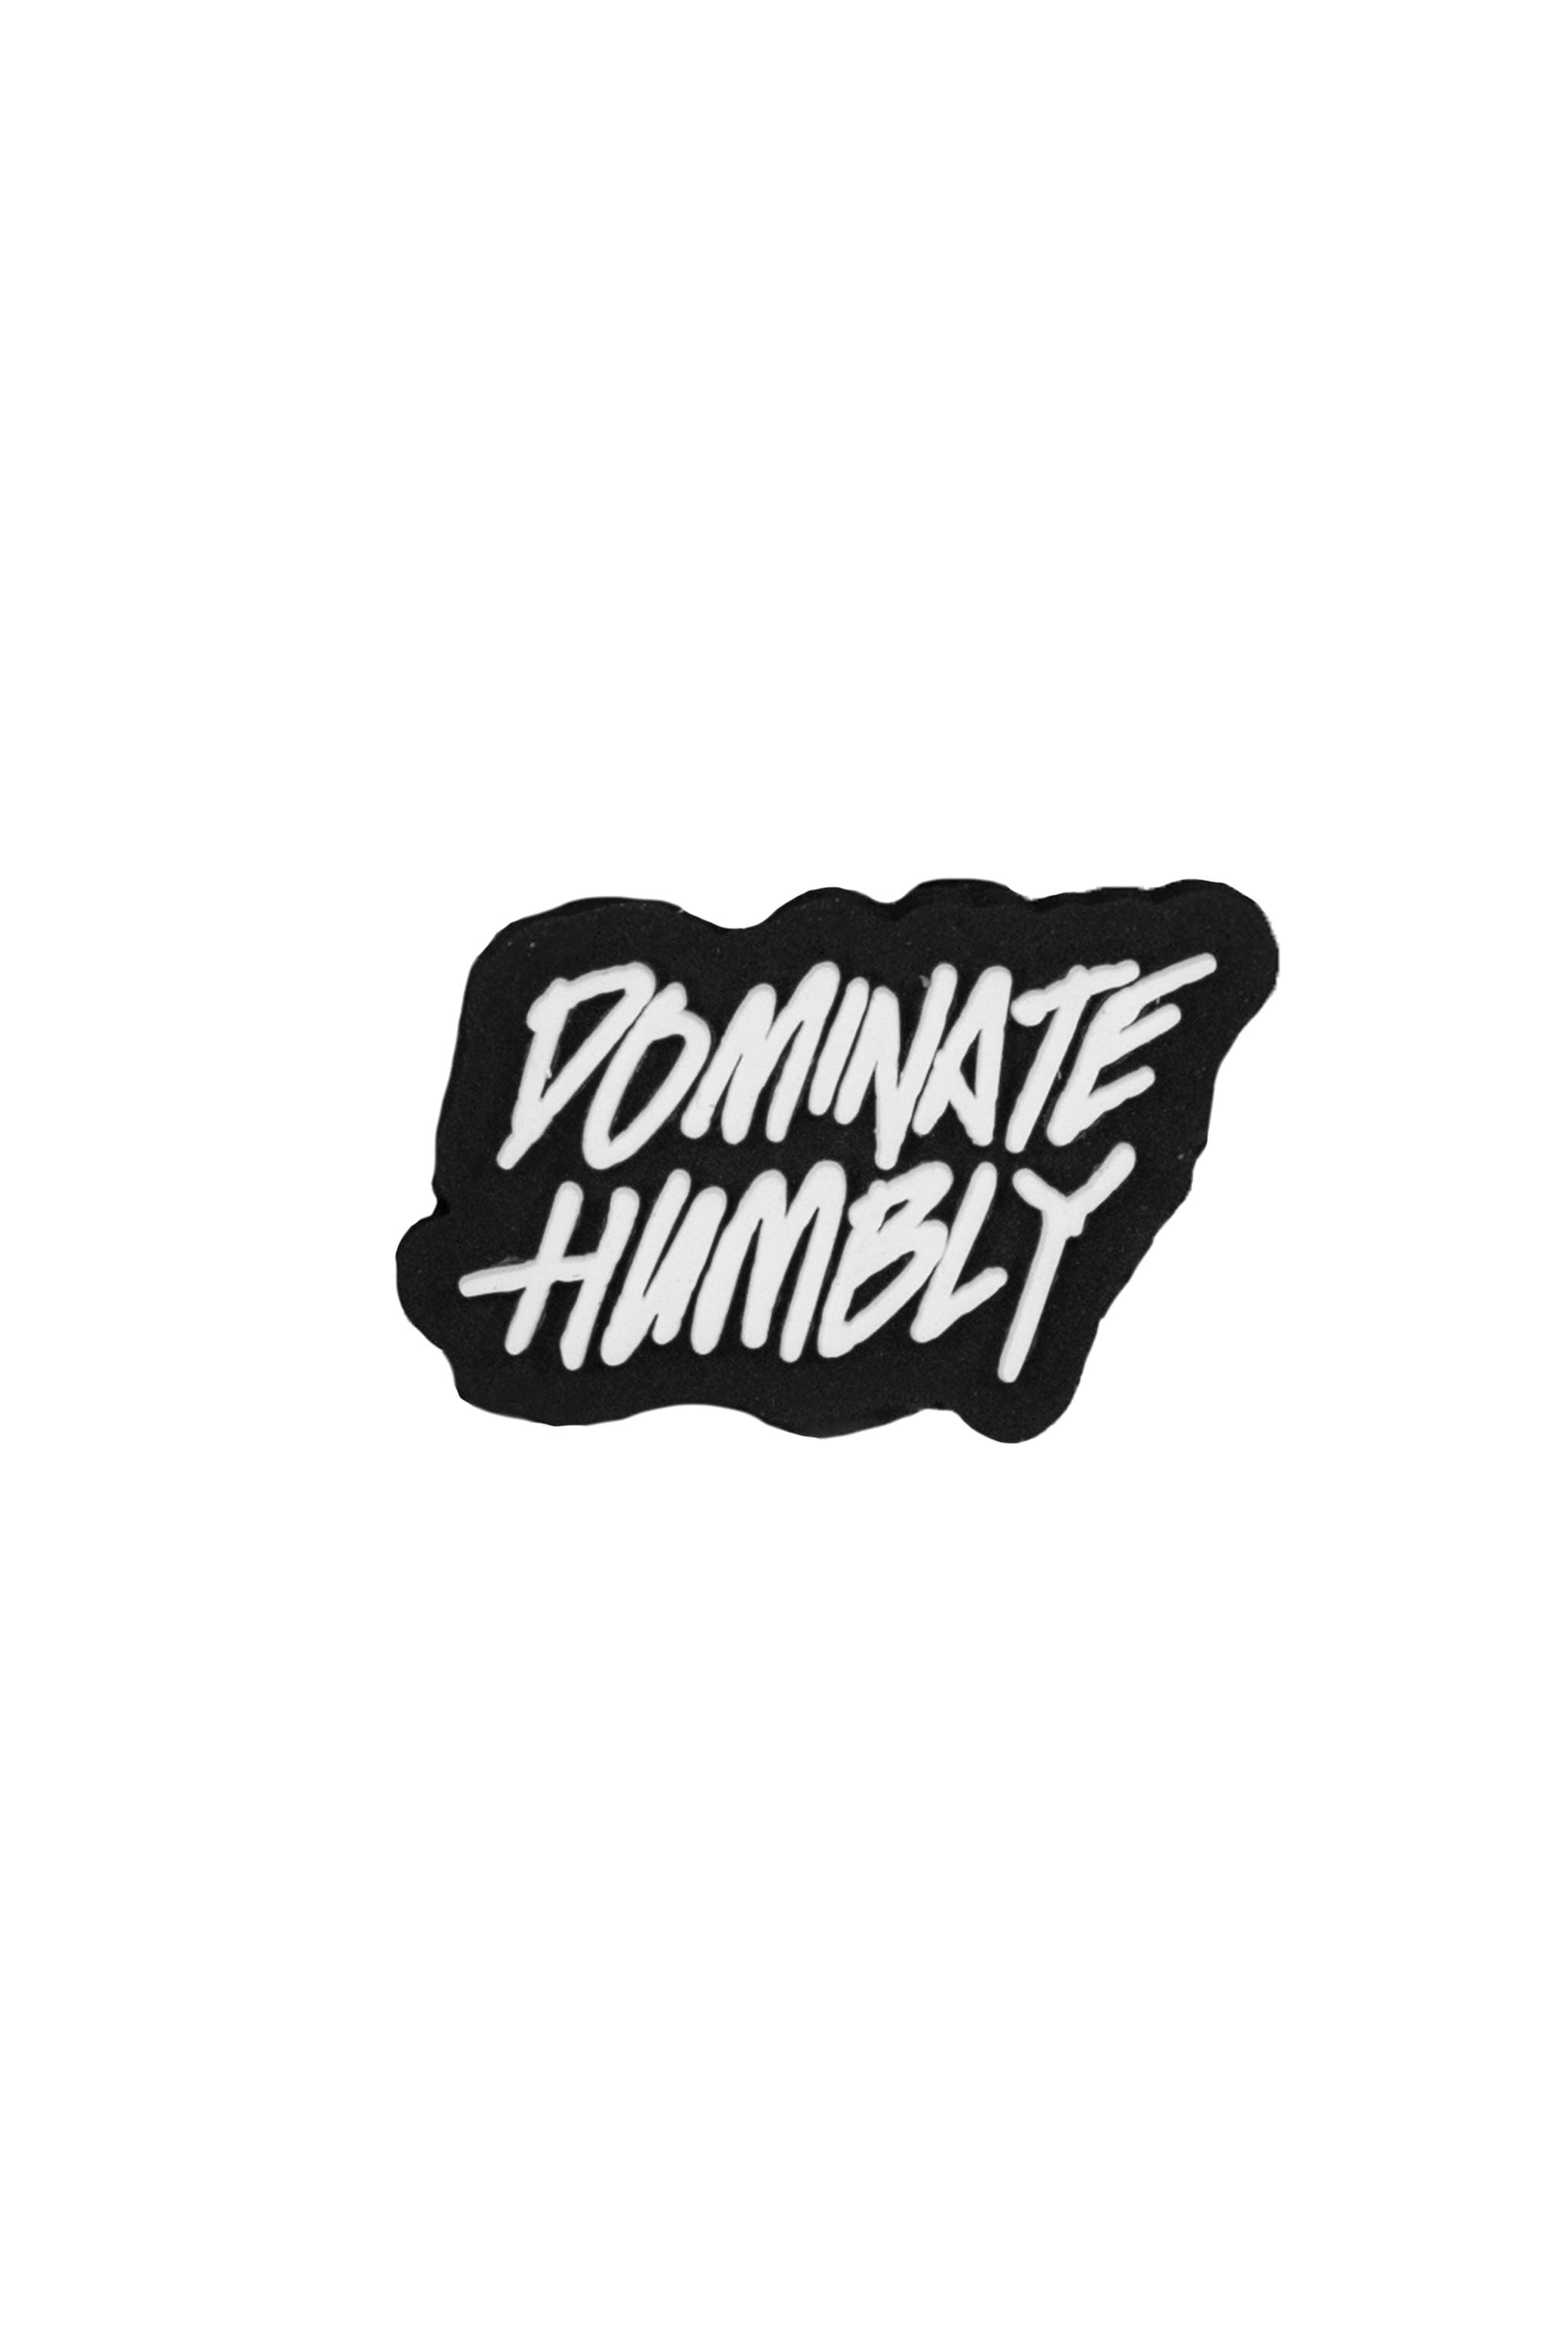 Dominate Humbly - Clog Charm (White/Black)